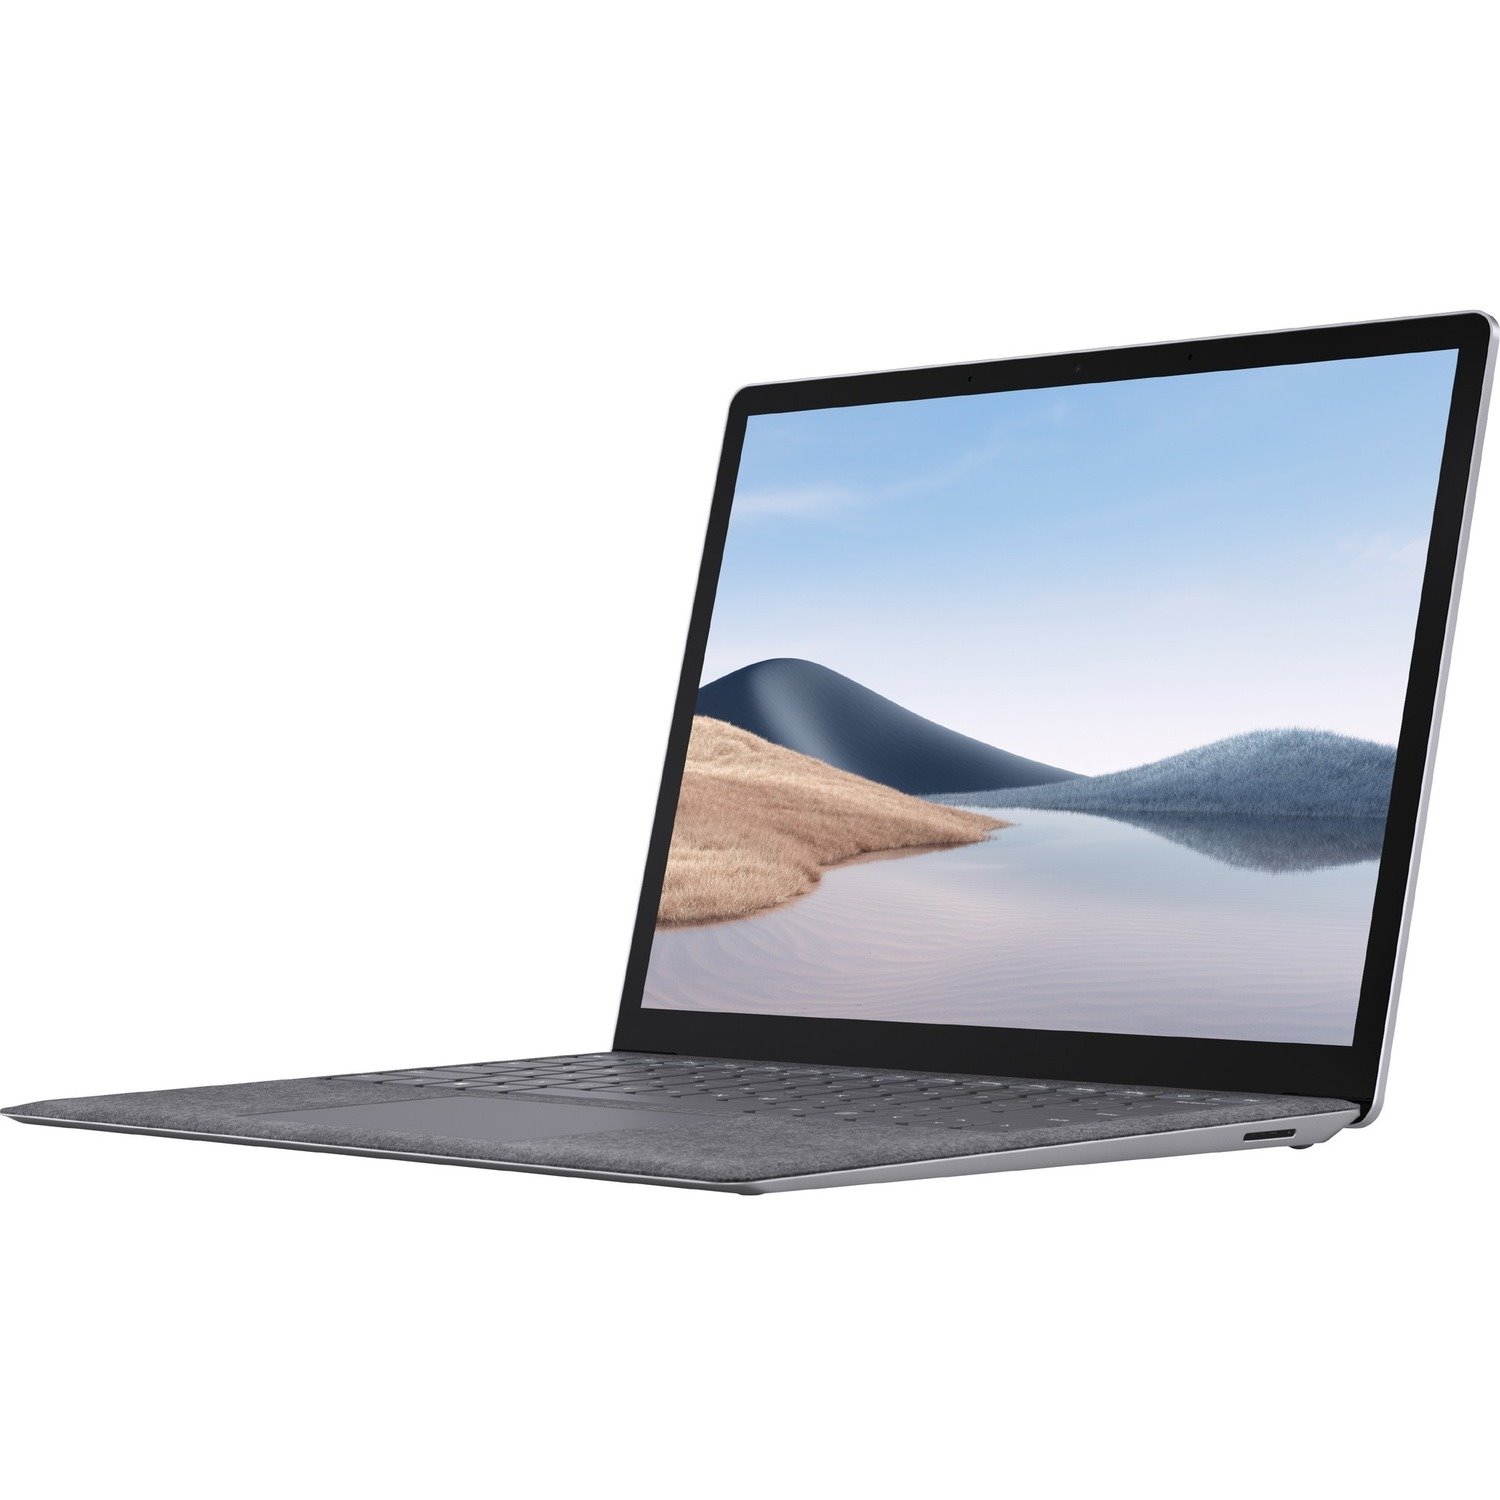 Microsoft Surface Laptop 4 34.3 cm (13.5") Touchscreen Notebook - 2256 x 1504 - Intel Core i5 11th Gen i5-1145G7 2.60 GHz - 8 GB Total RAM - 512 GB SSD - Platinum